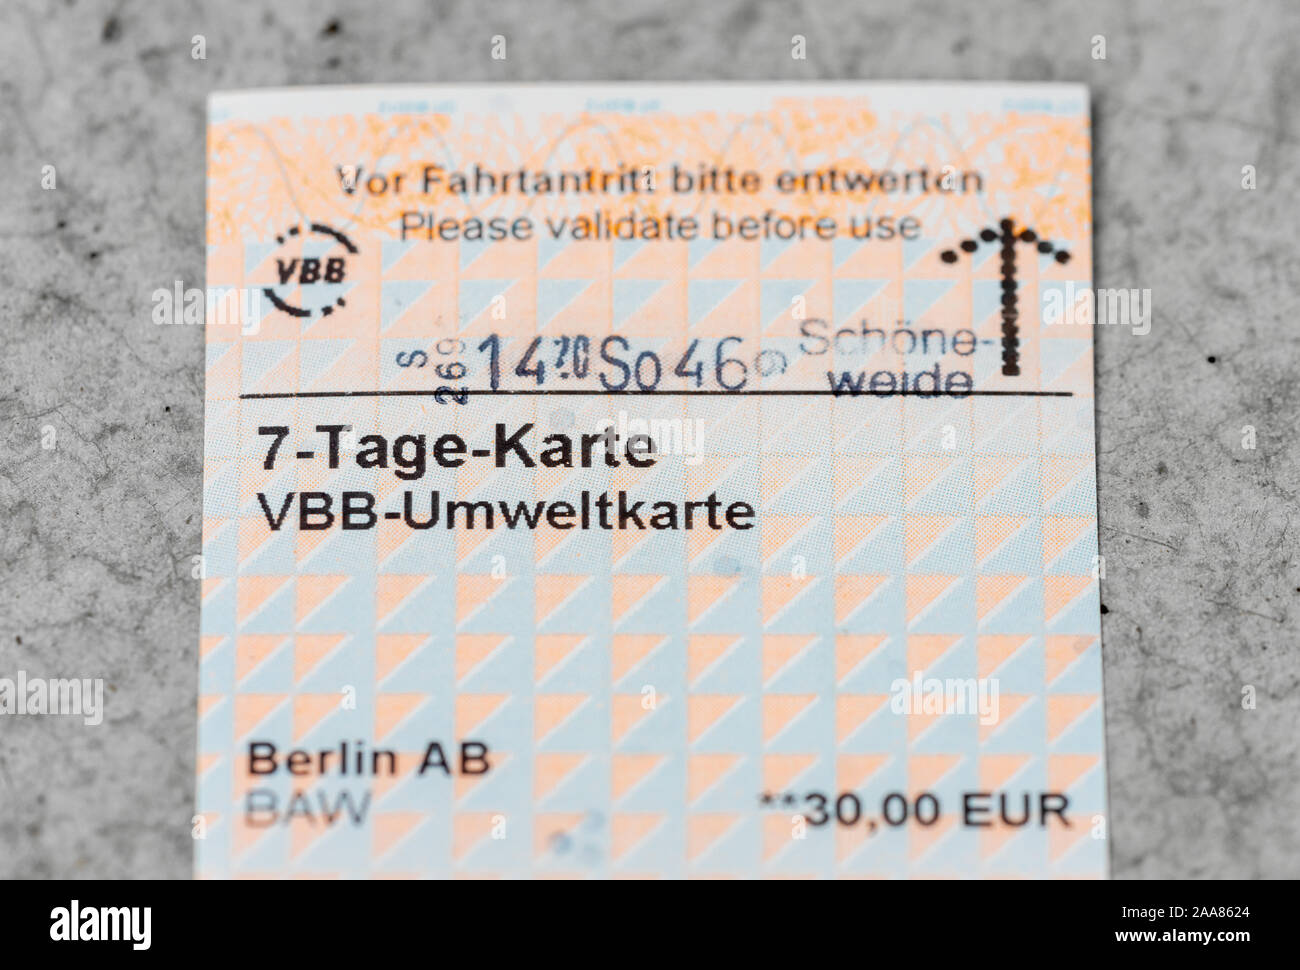 7 Tage Karte VBB Umweltkarte - Français 7 day ticket ticket de transports en commun de Berlin Banque D'Images